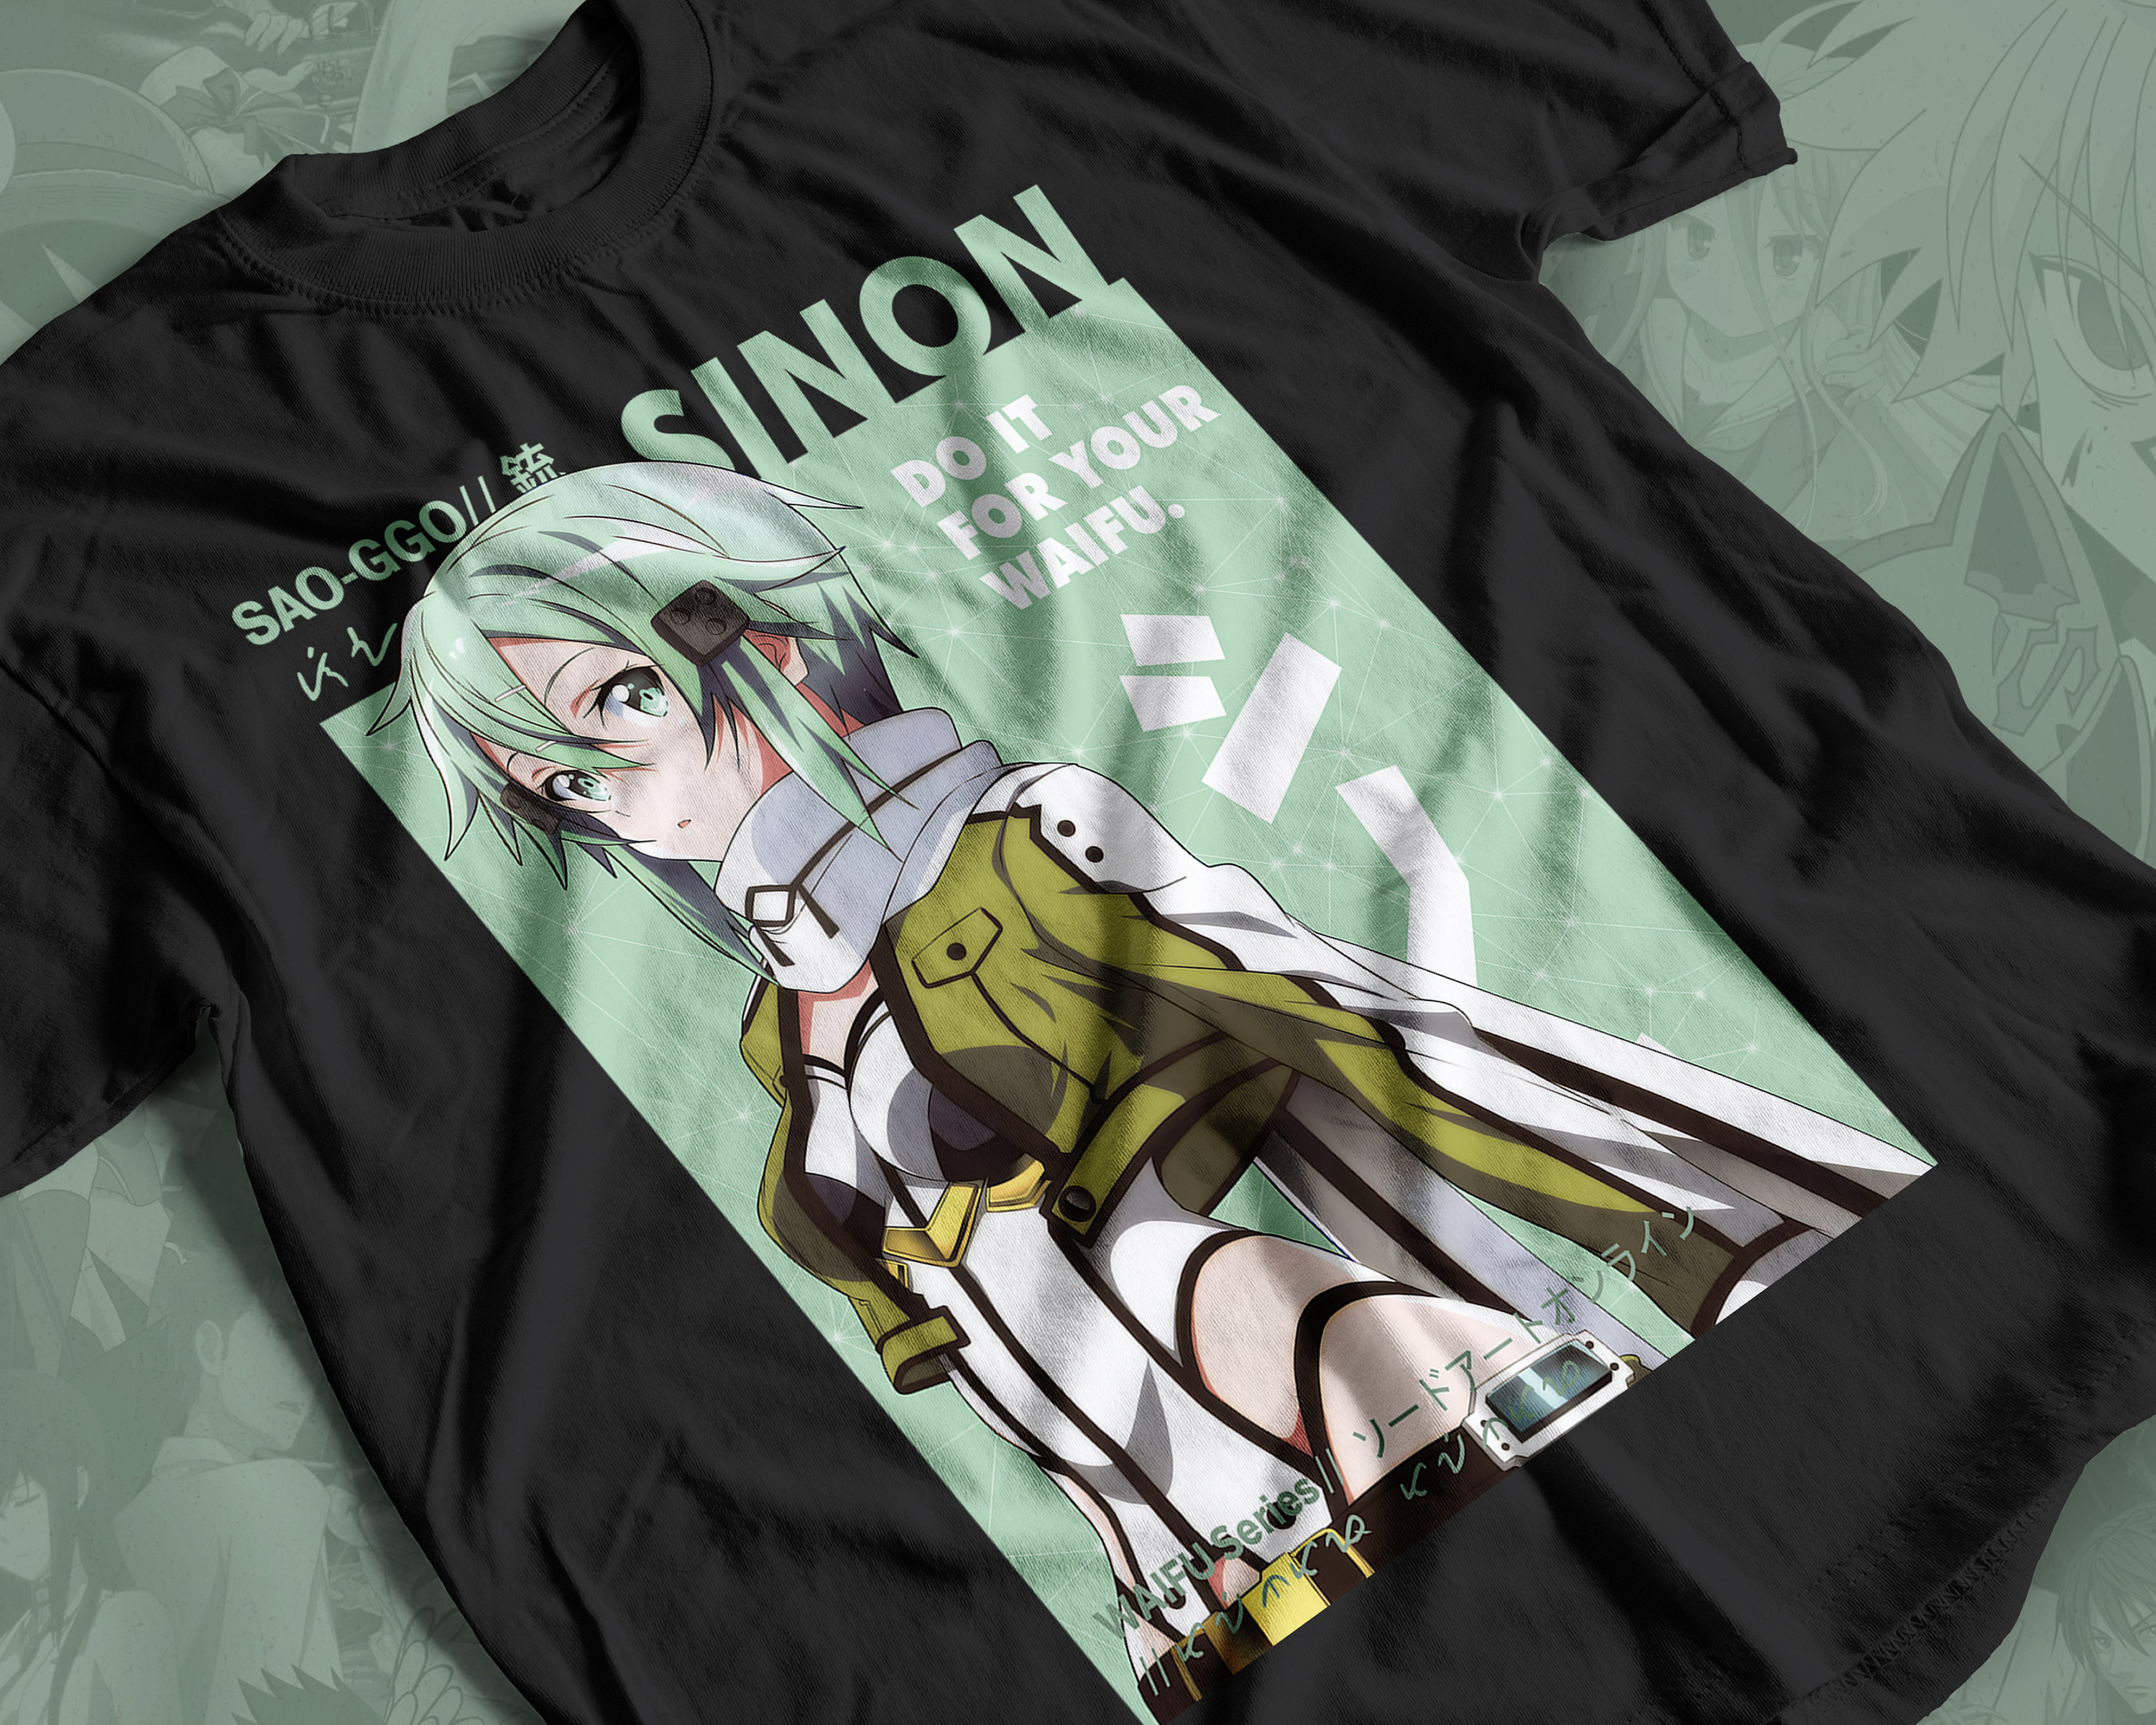 Sword Anime Art Online Shirt Men's Personalised Crew Neck Short Sleeve T  Shirt Fashion Graphic Tees Black Small